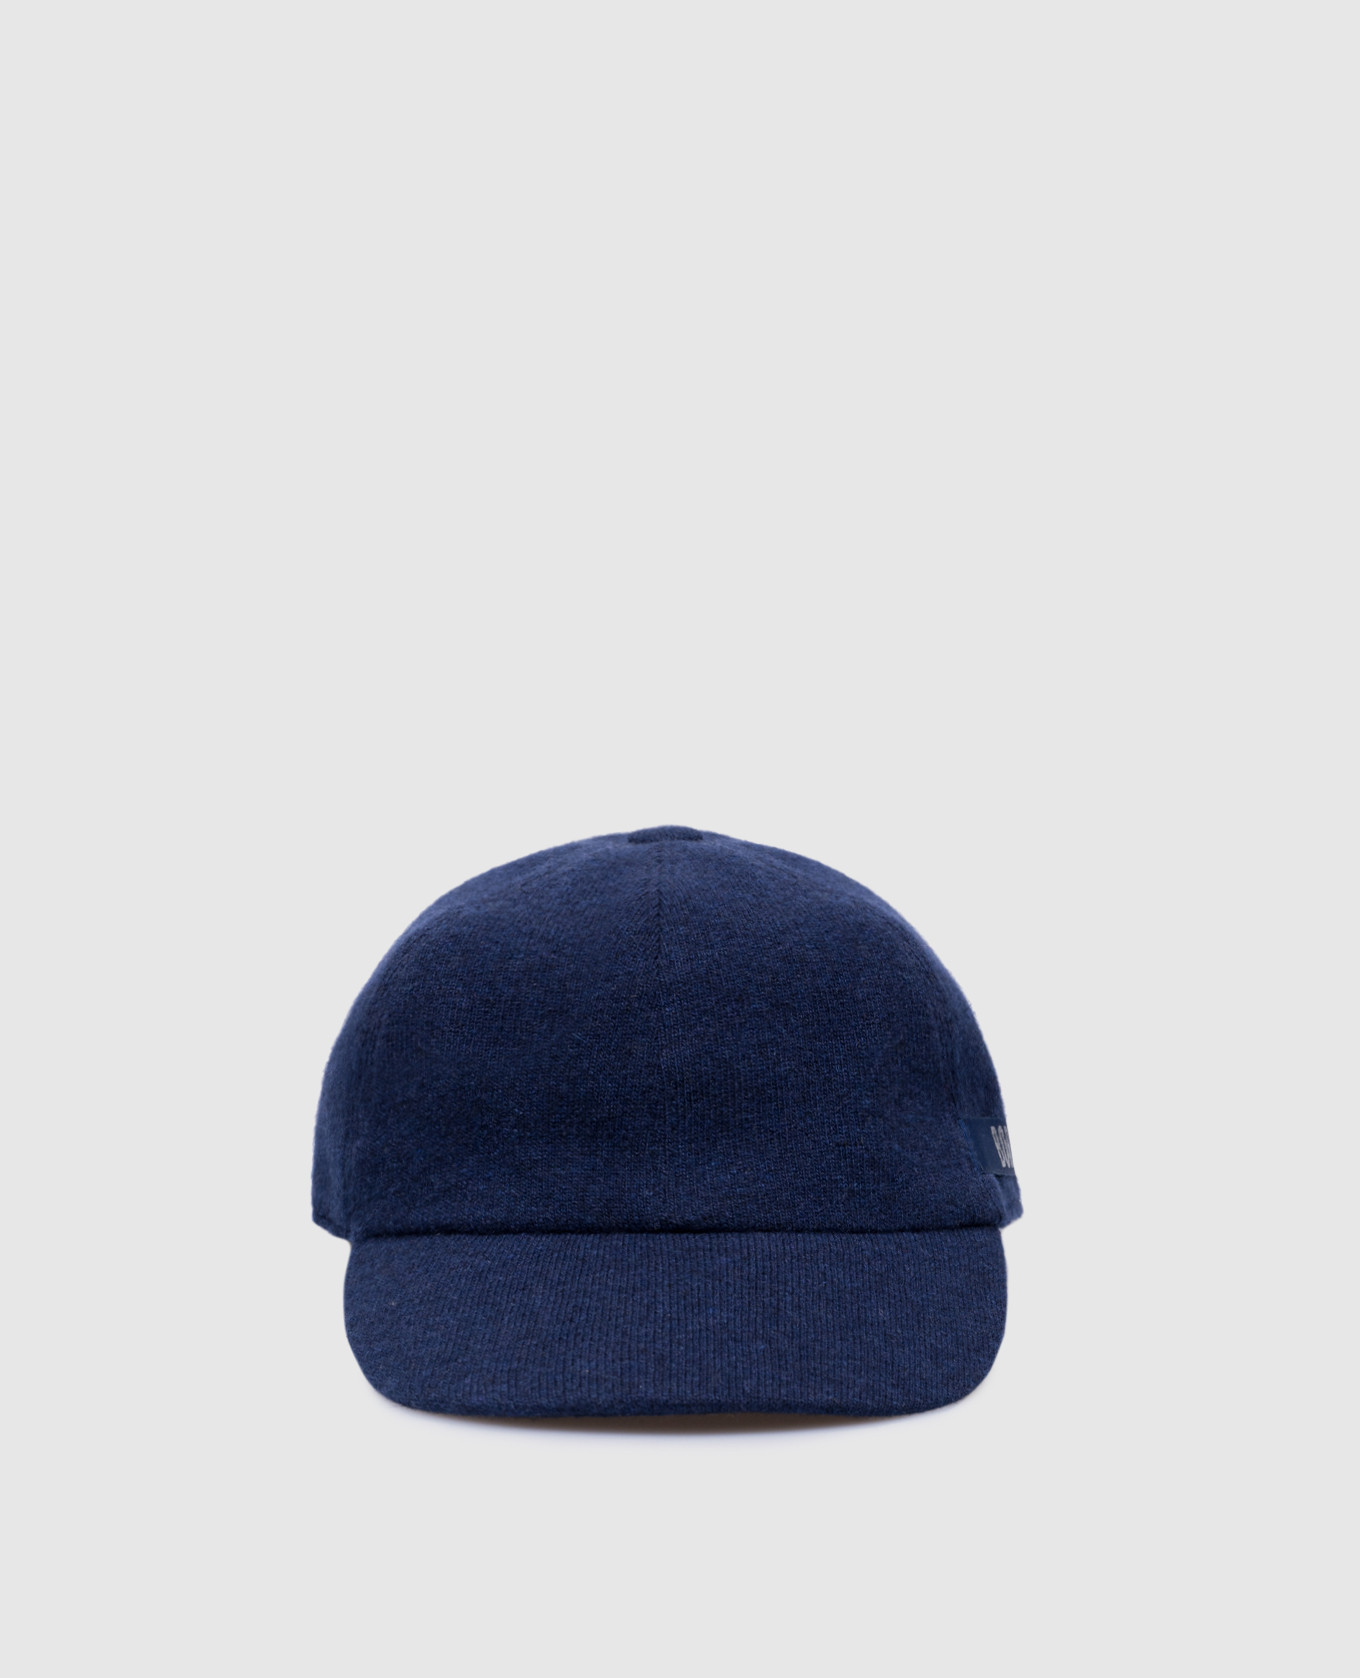 Blue cashmere cap with logo